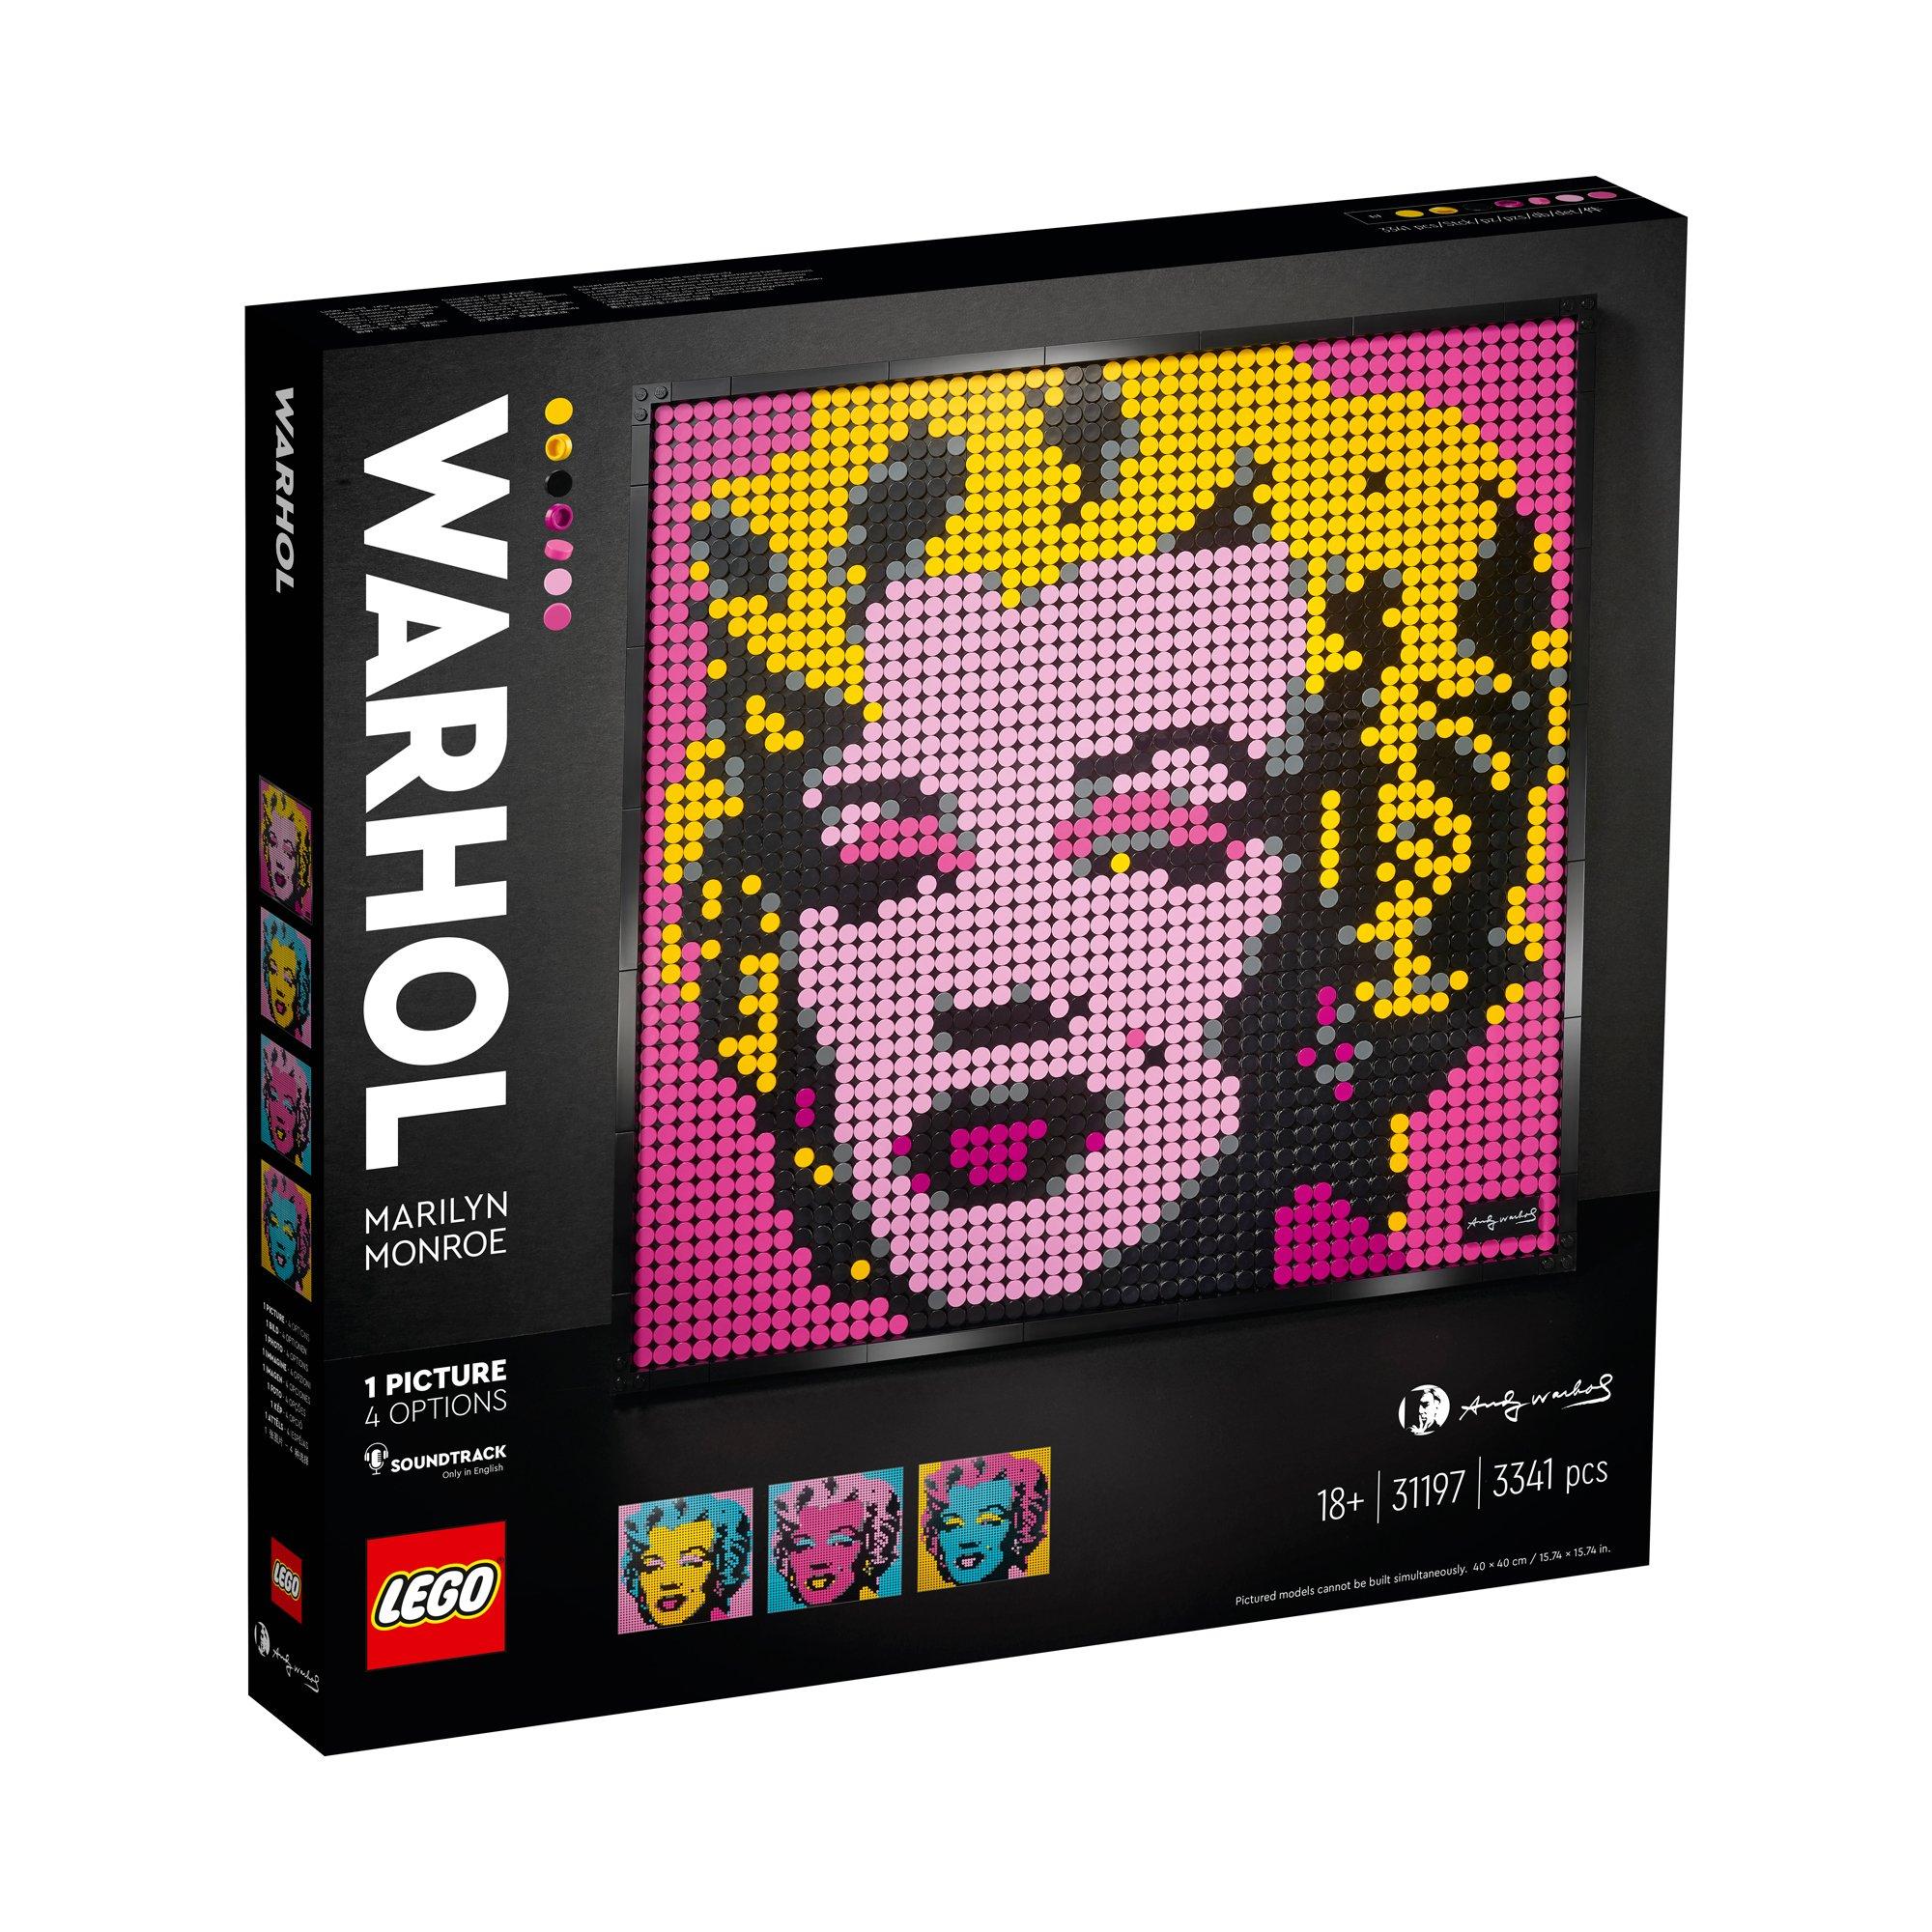 Image of LEGO 31197 Andy Warhol's Marilyn Monroe